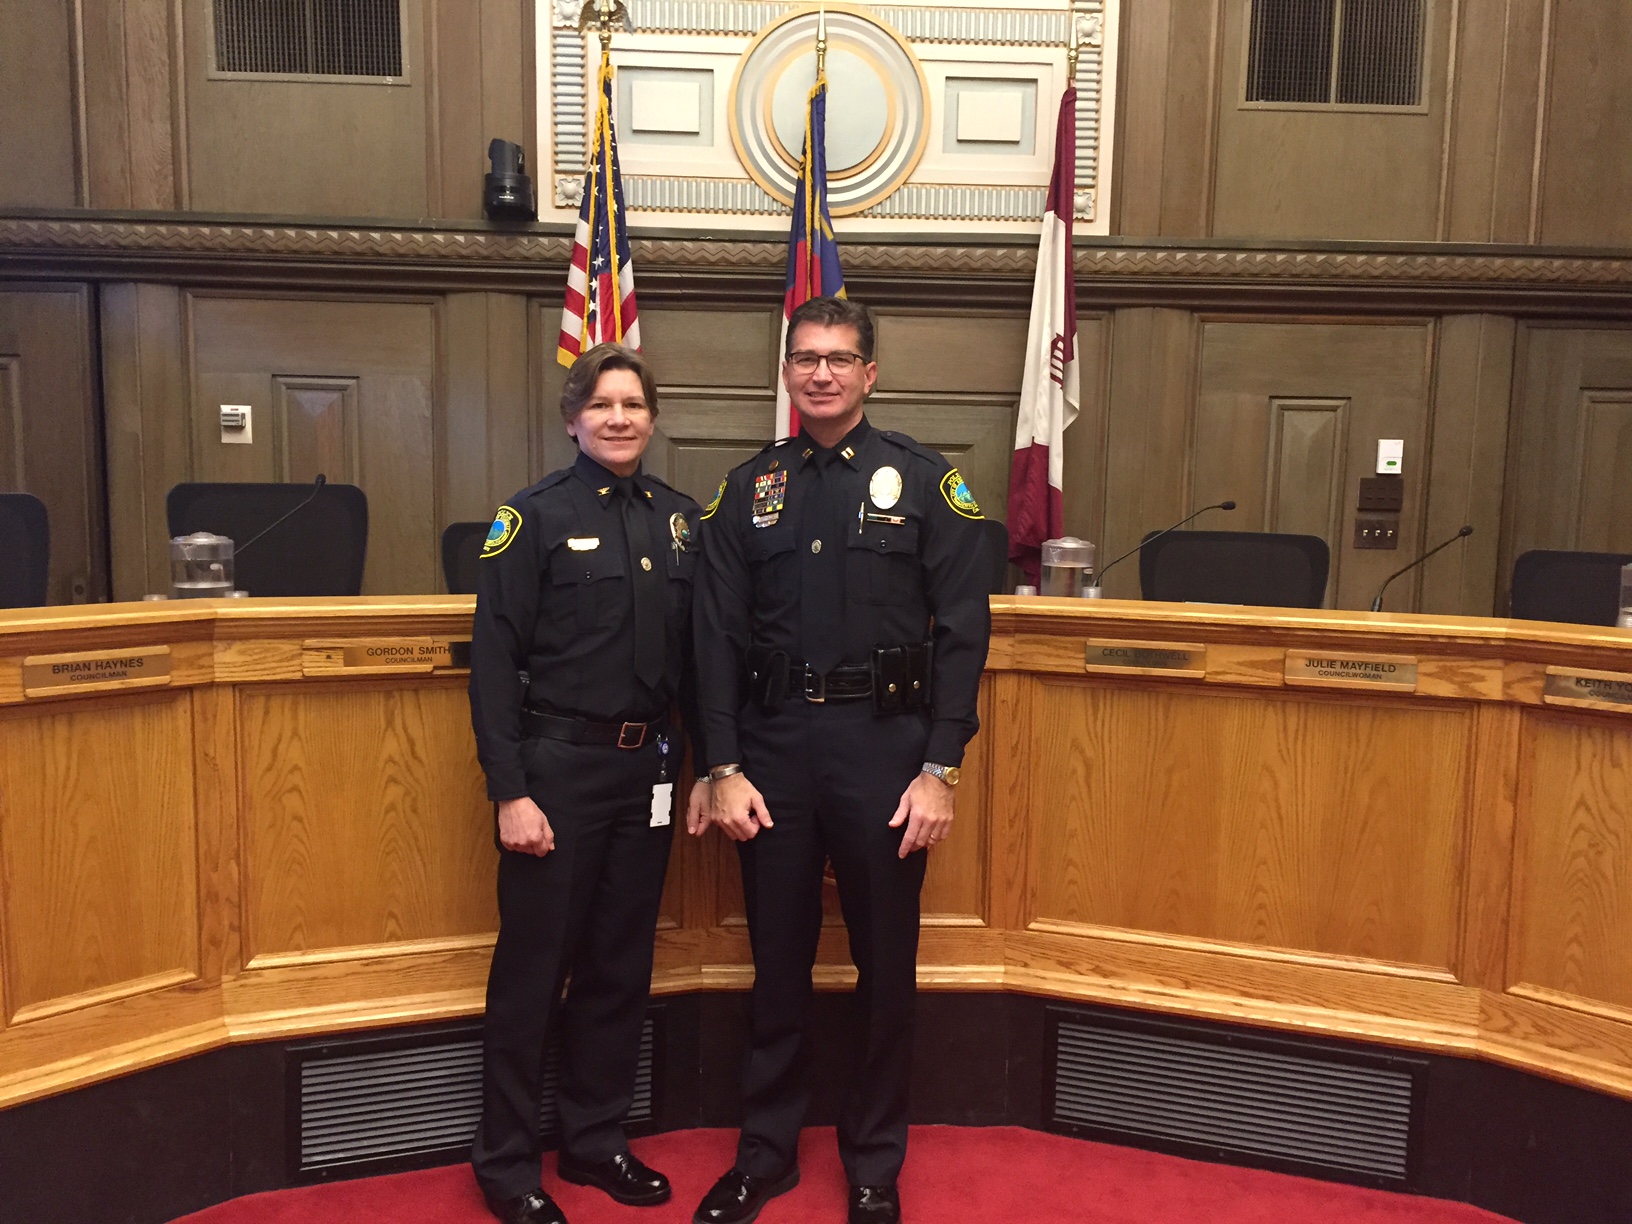 Twelve promoted in Asheville Police ceremony